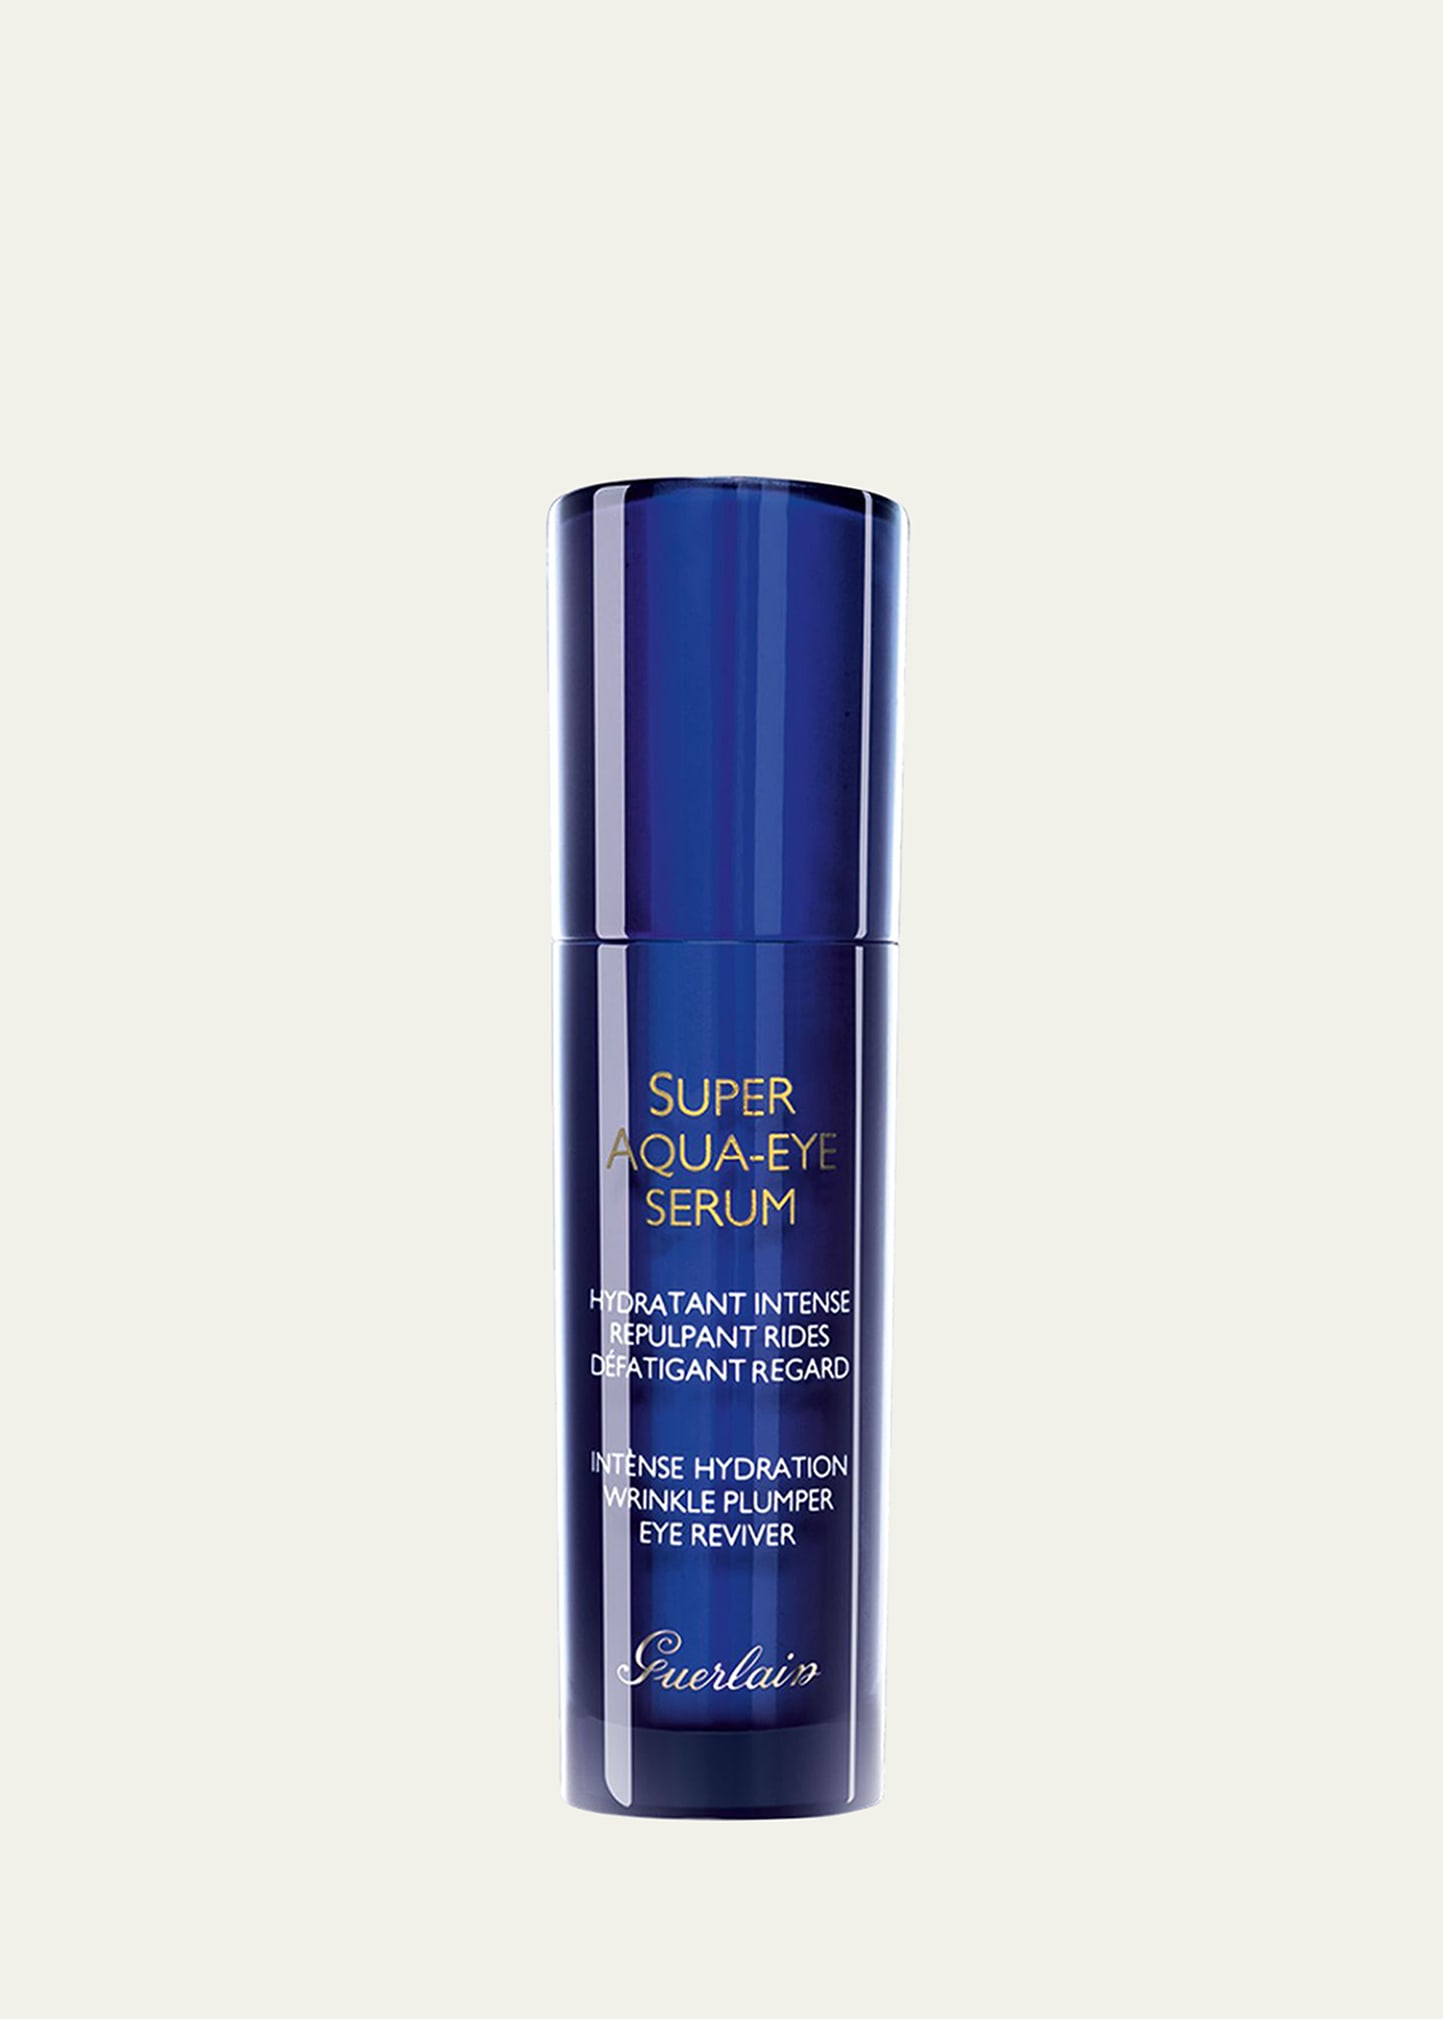 Super Aqua Eye Serum - Intensive Hydration Wrinkle Plumper Eye Reviver, 0.5 oz.